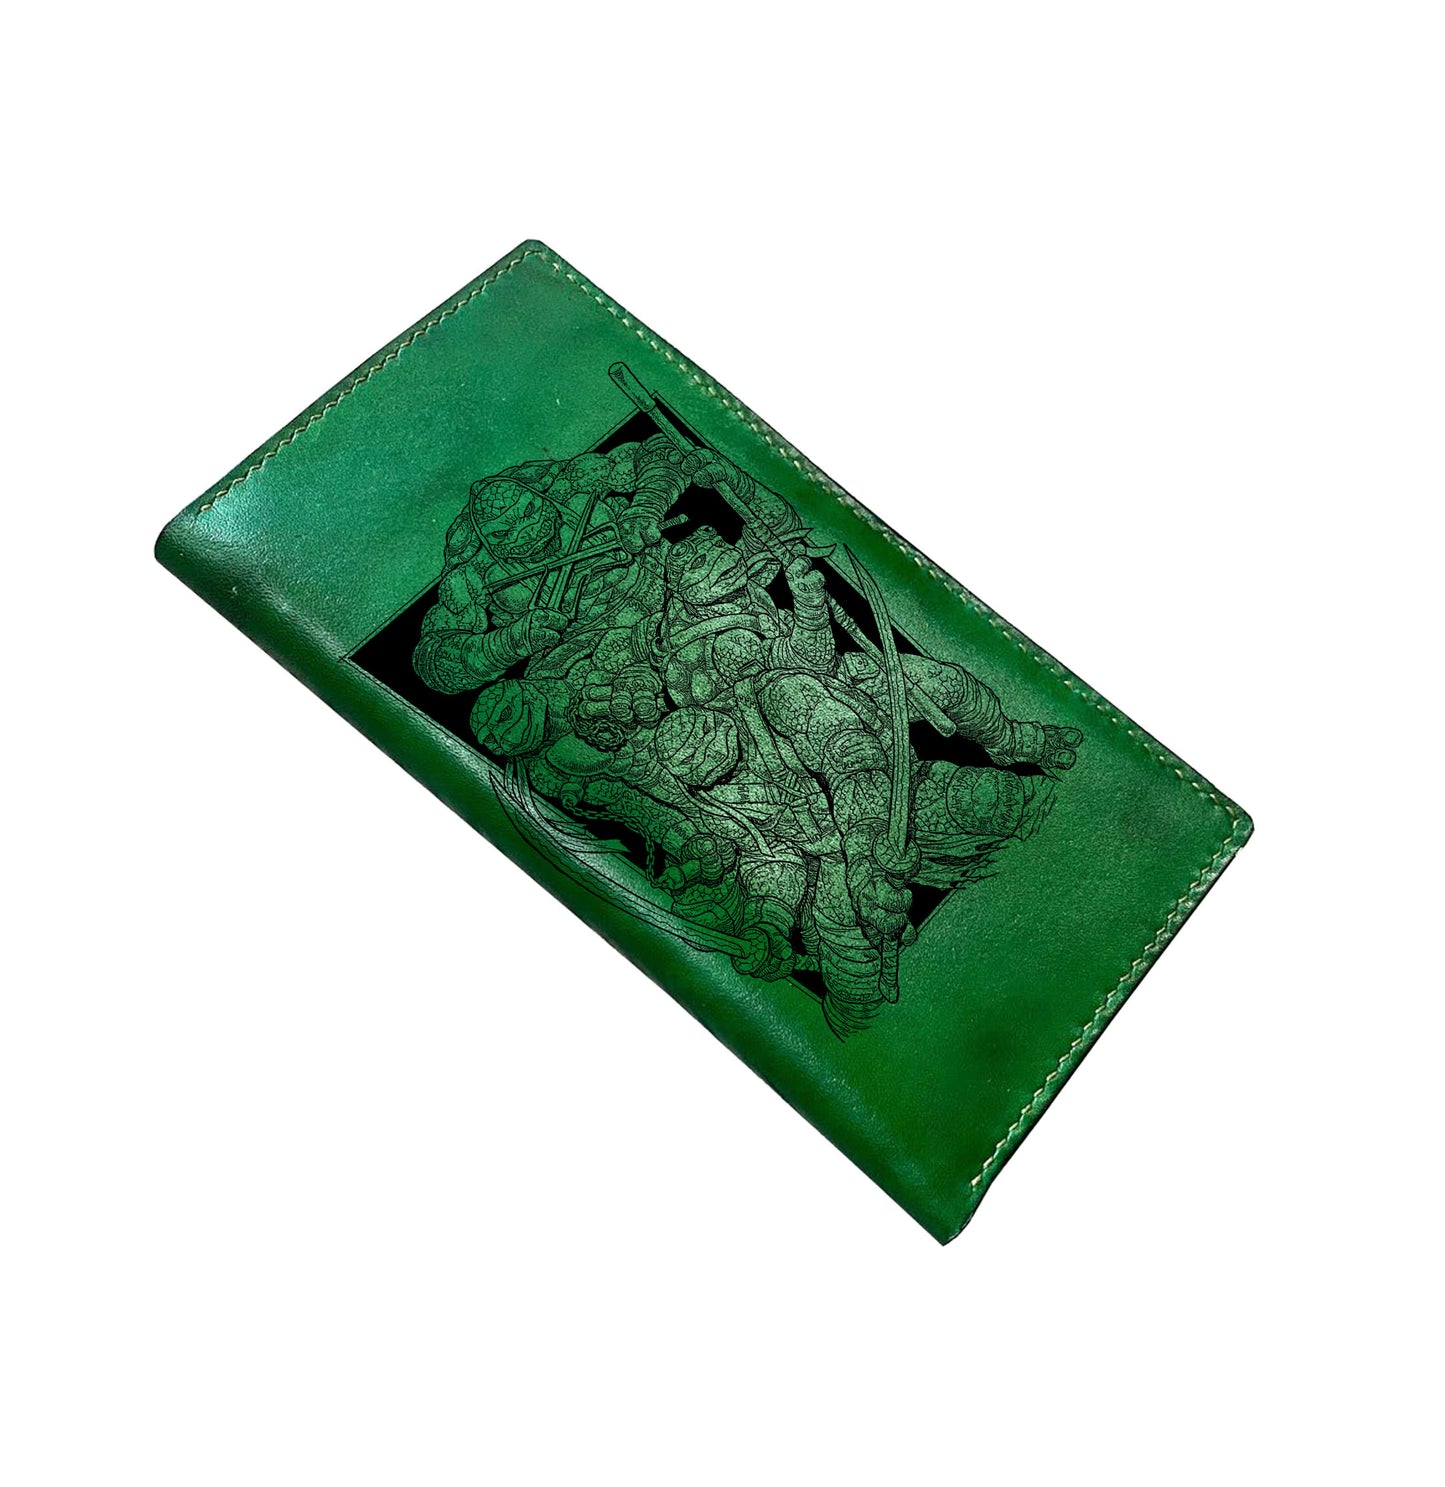 Mayan Corner - Personalized genuine leather handmade wallet, leather gift ideas for him, ninja turtle leather art wallet - master splinter - 01112213